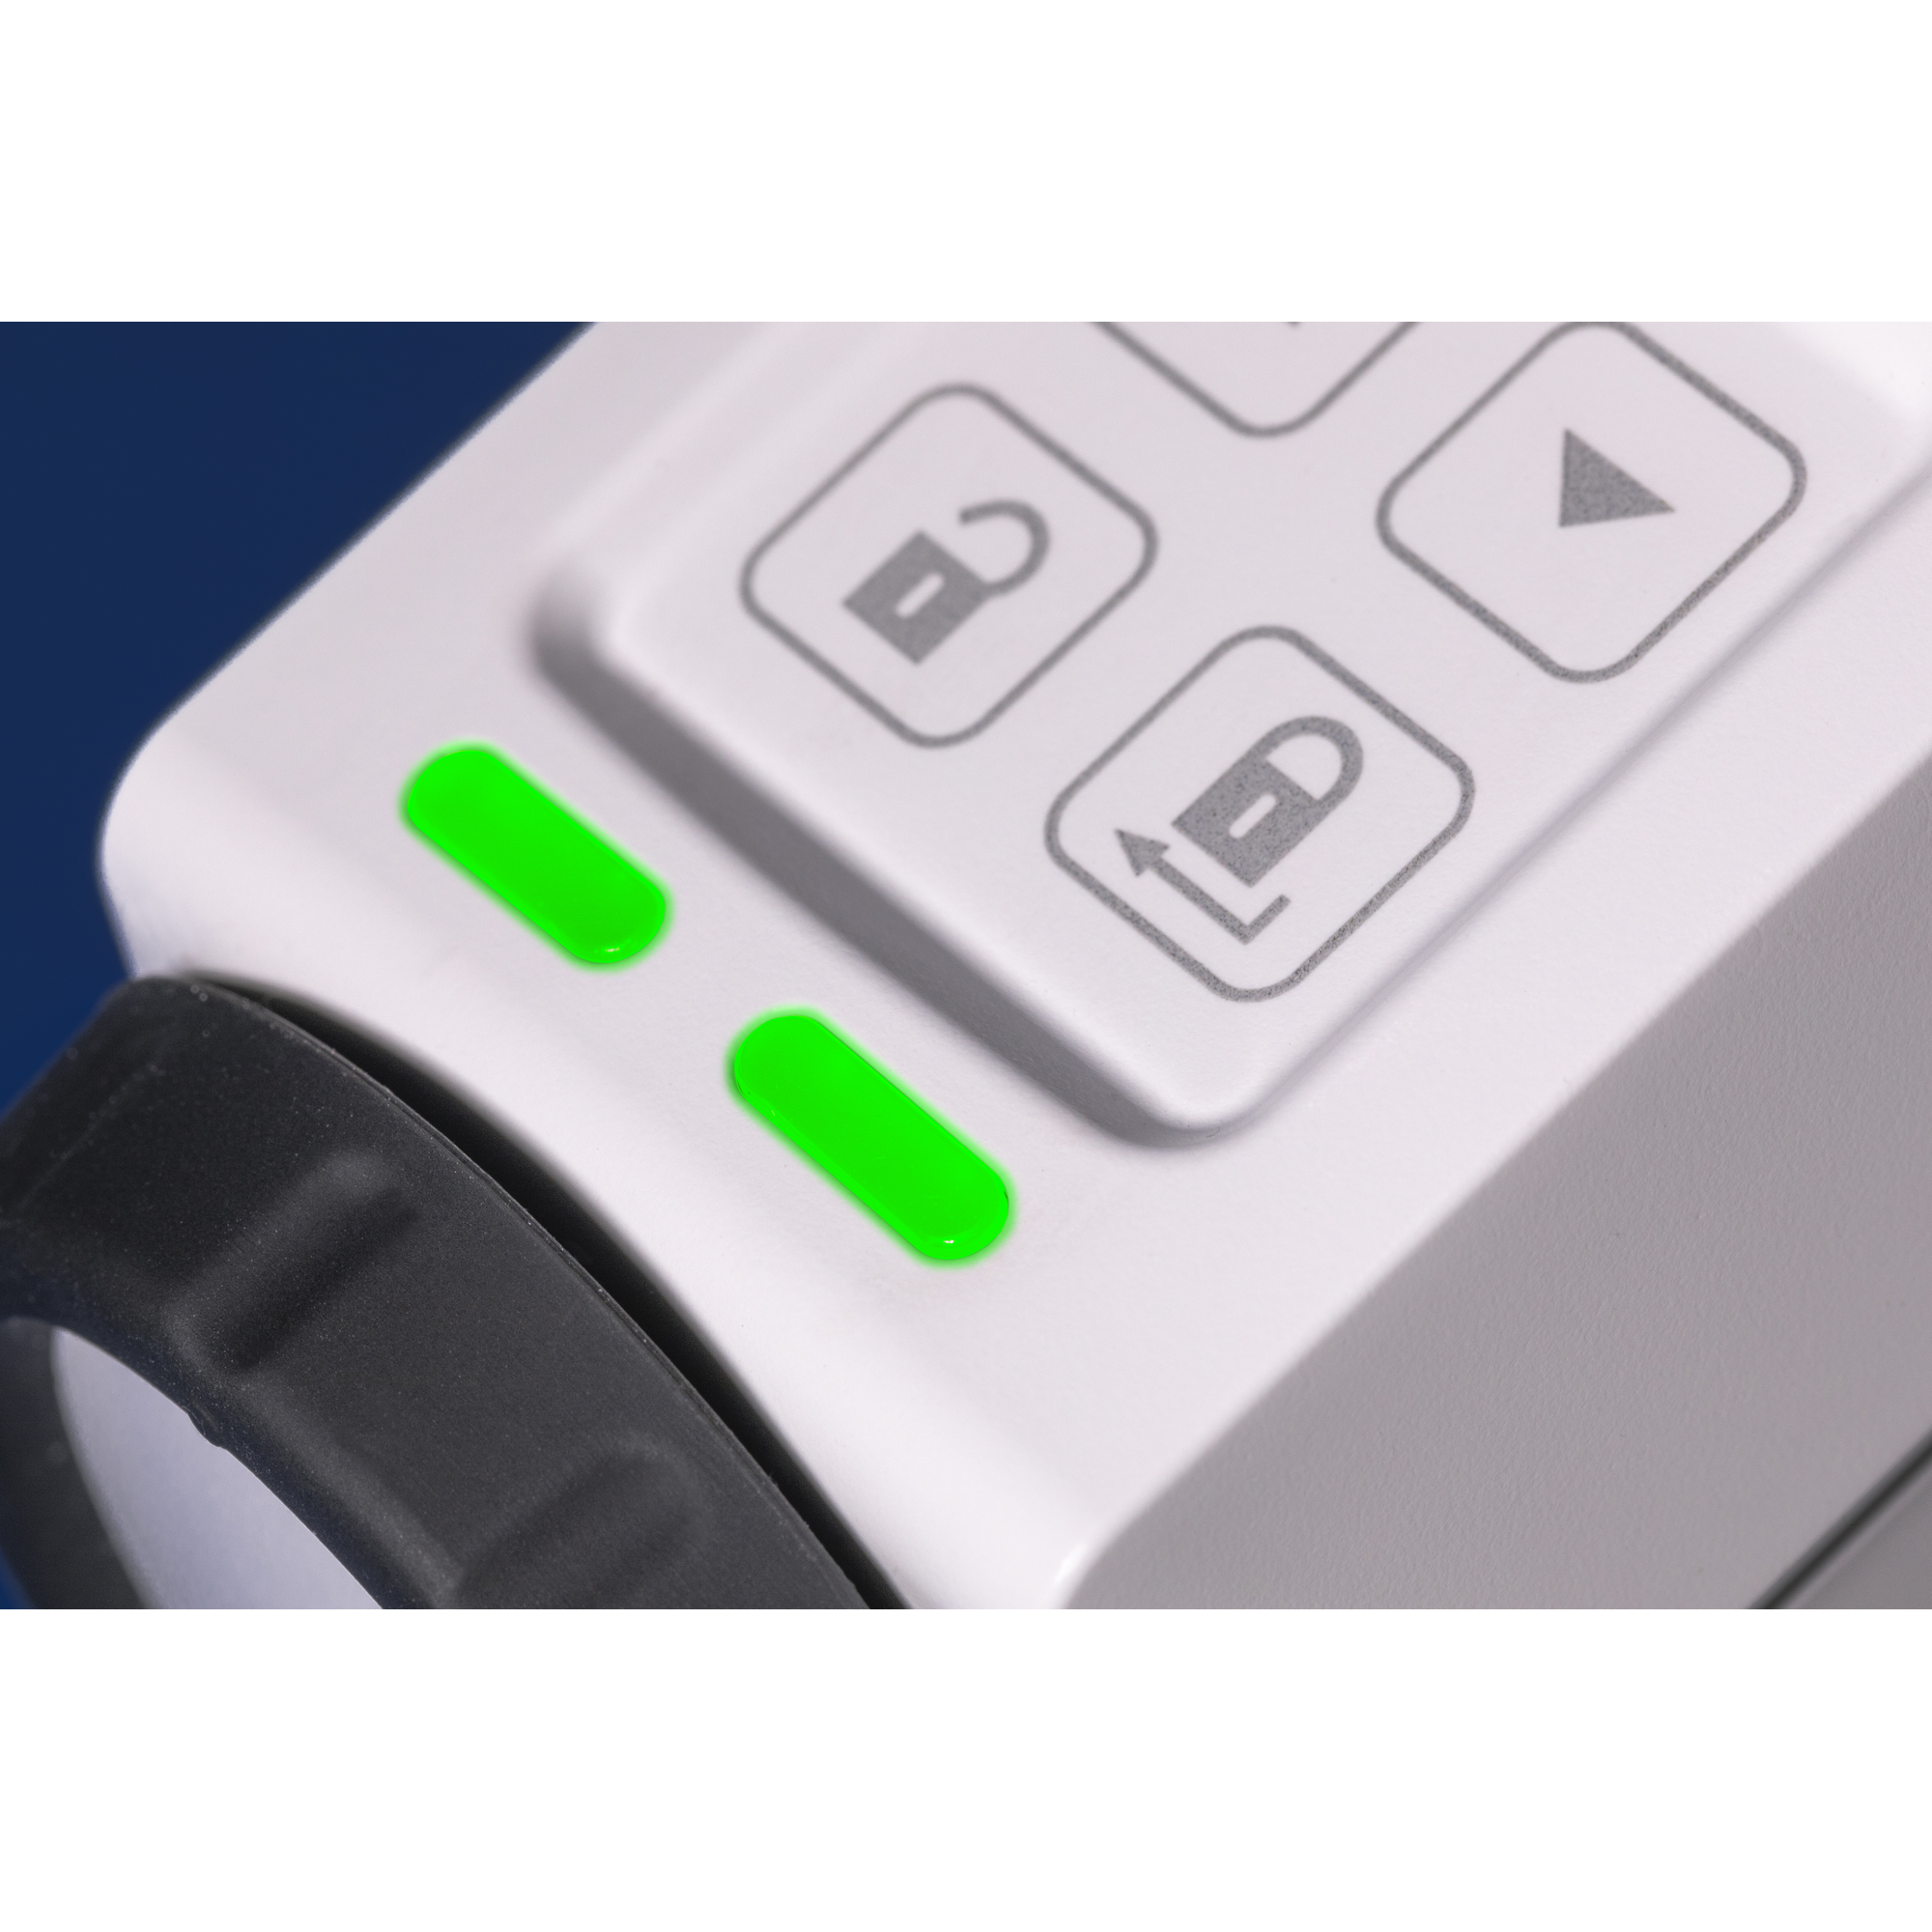 Türschlossantrieb 'CFA3100 W' HomeTec Pro Bluetooth + product picture